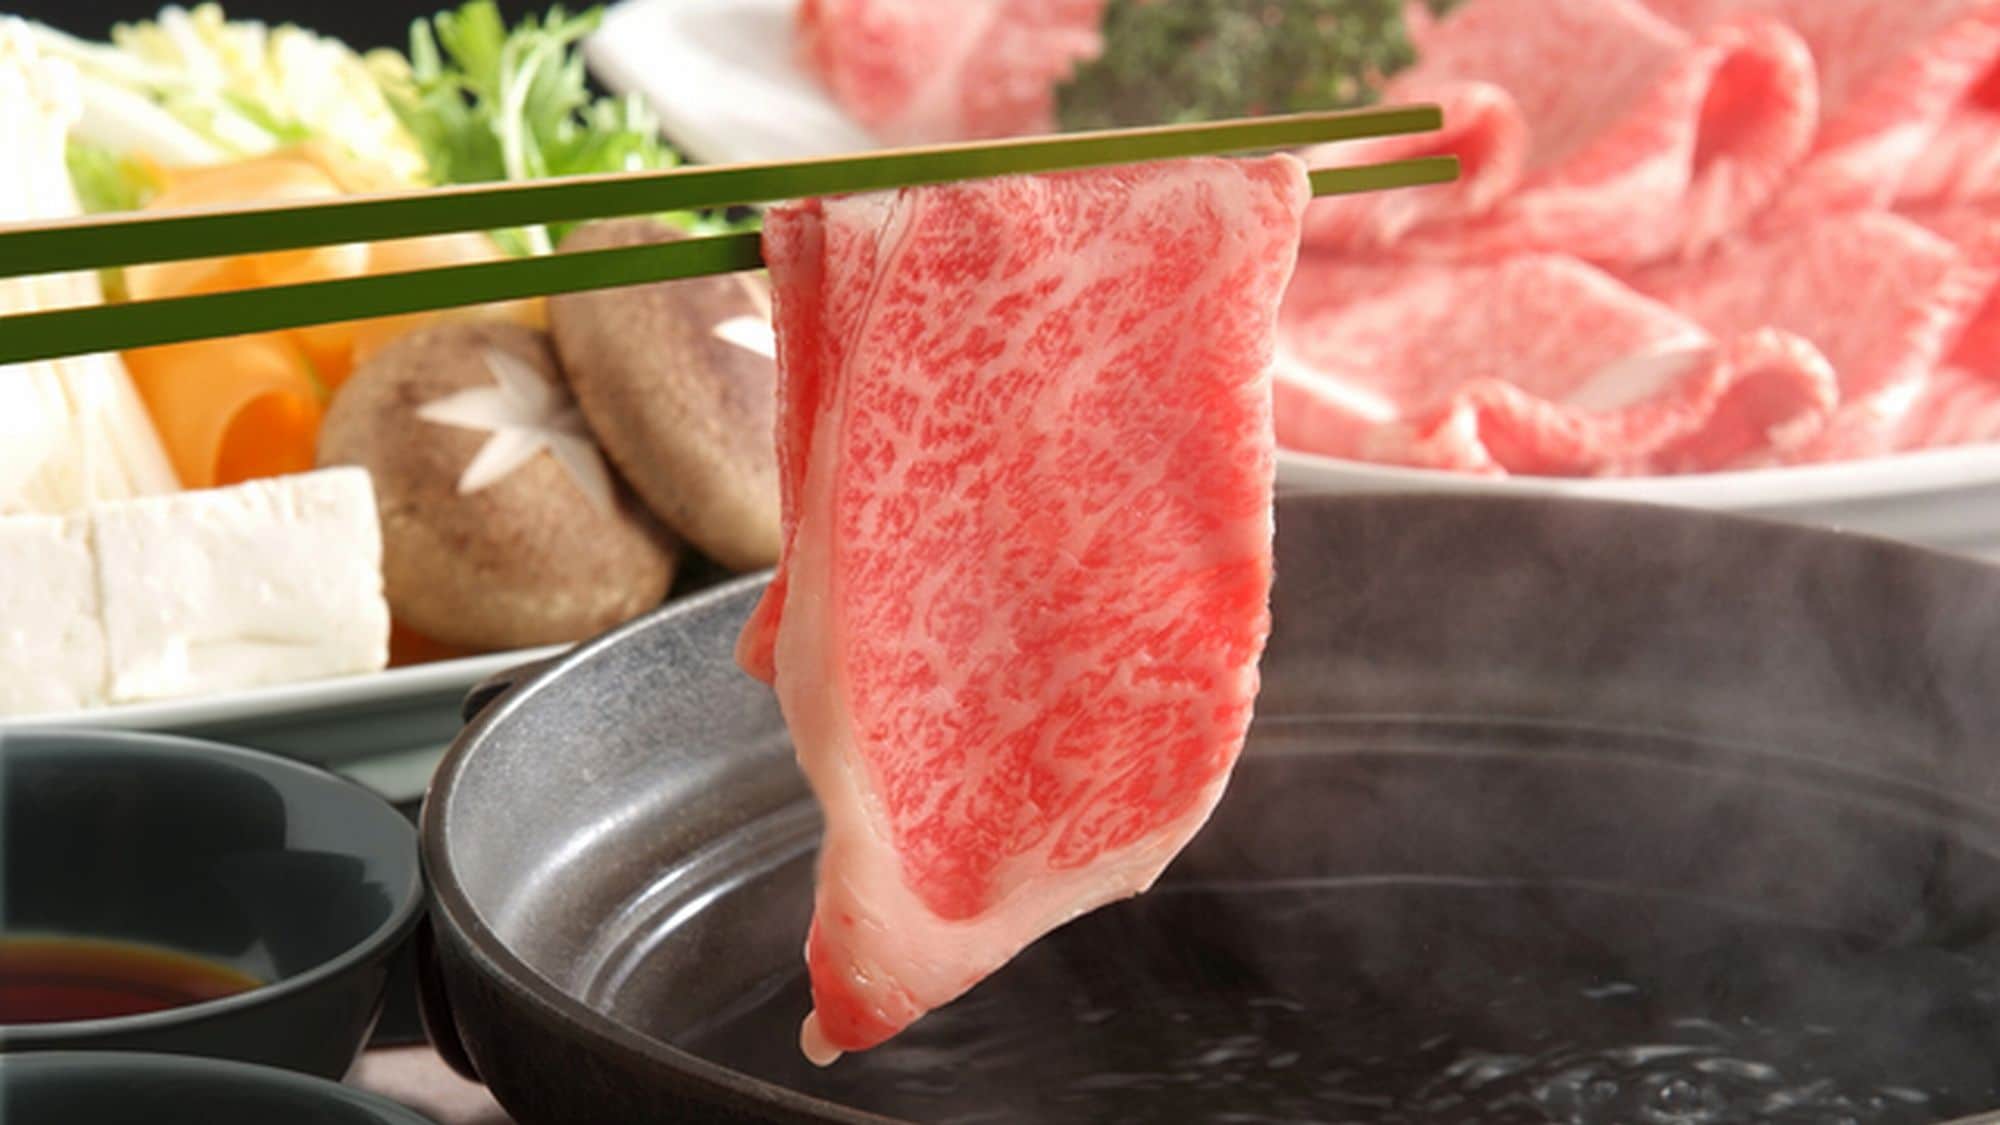 The finest Japanese black beef sirloin shabu-shabu